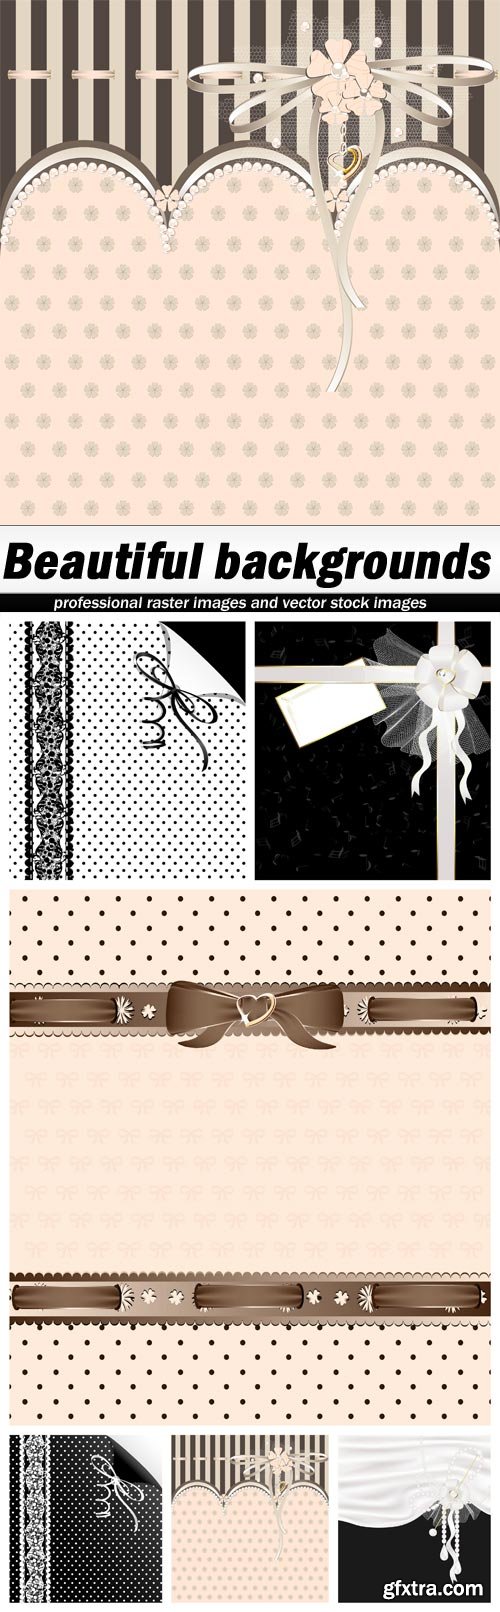 Beautiful backgrounds - 6 EPS